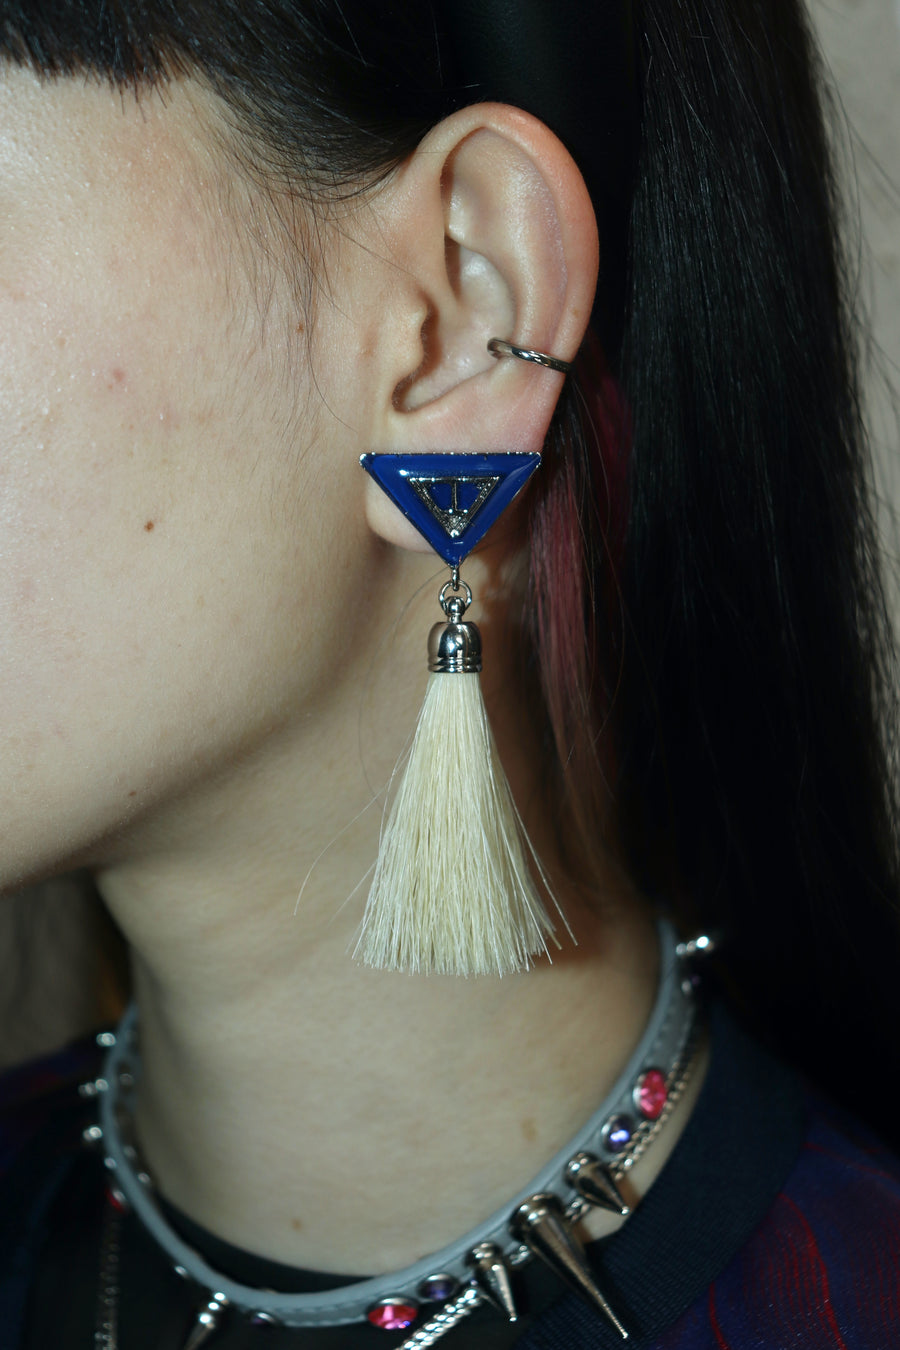 TOGA VIRILIS  Triangle fringe earrings